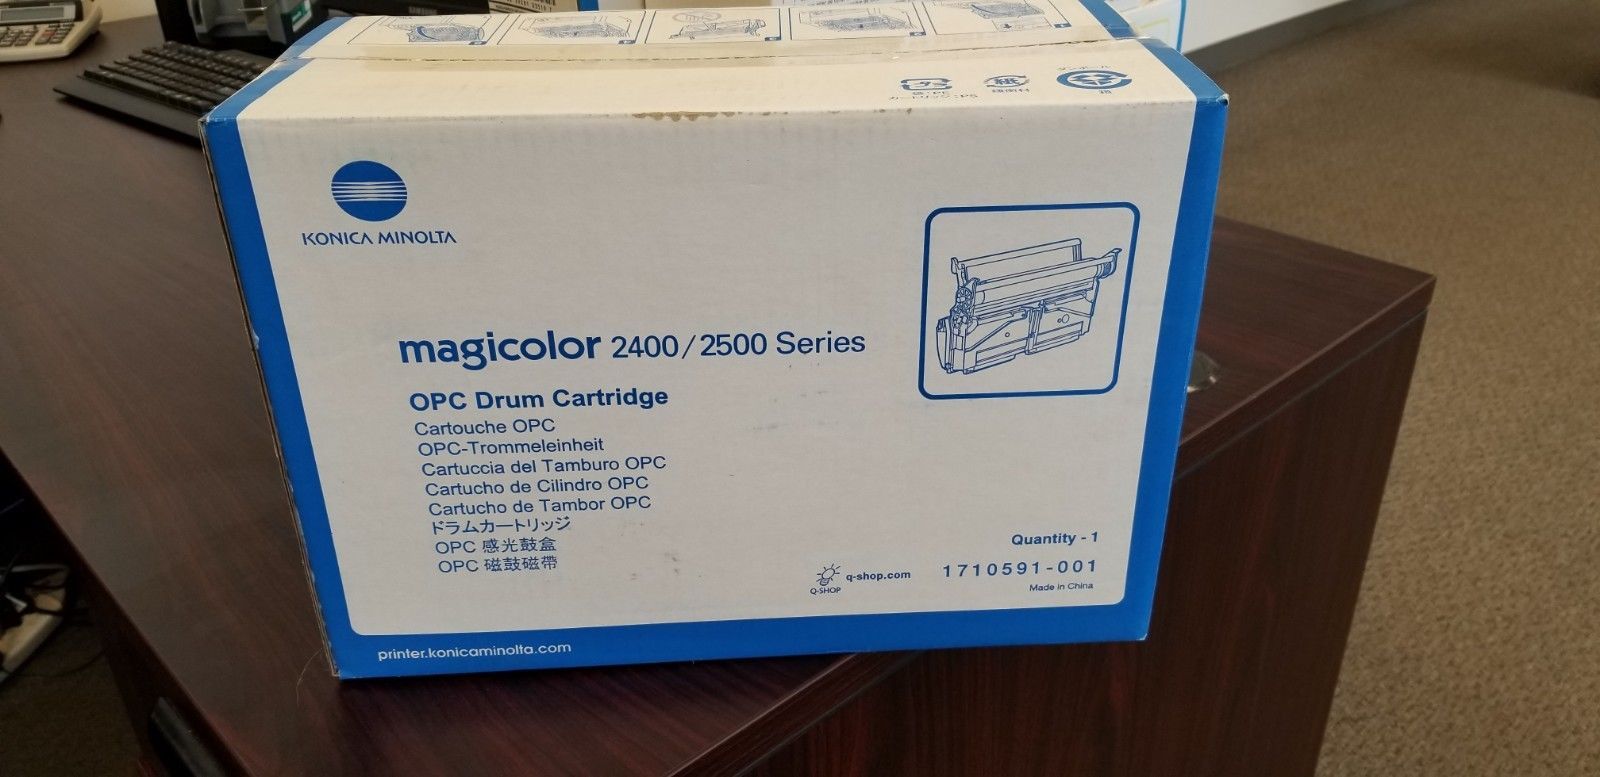 Konica Minolta OPC Drum Cartridge for Magicolor 2400/2500 Series 1710591-001 - $89.99